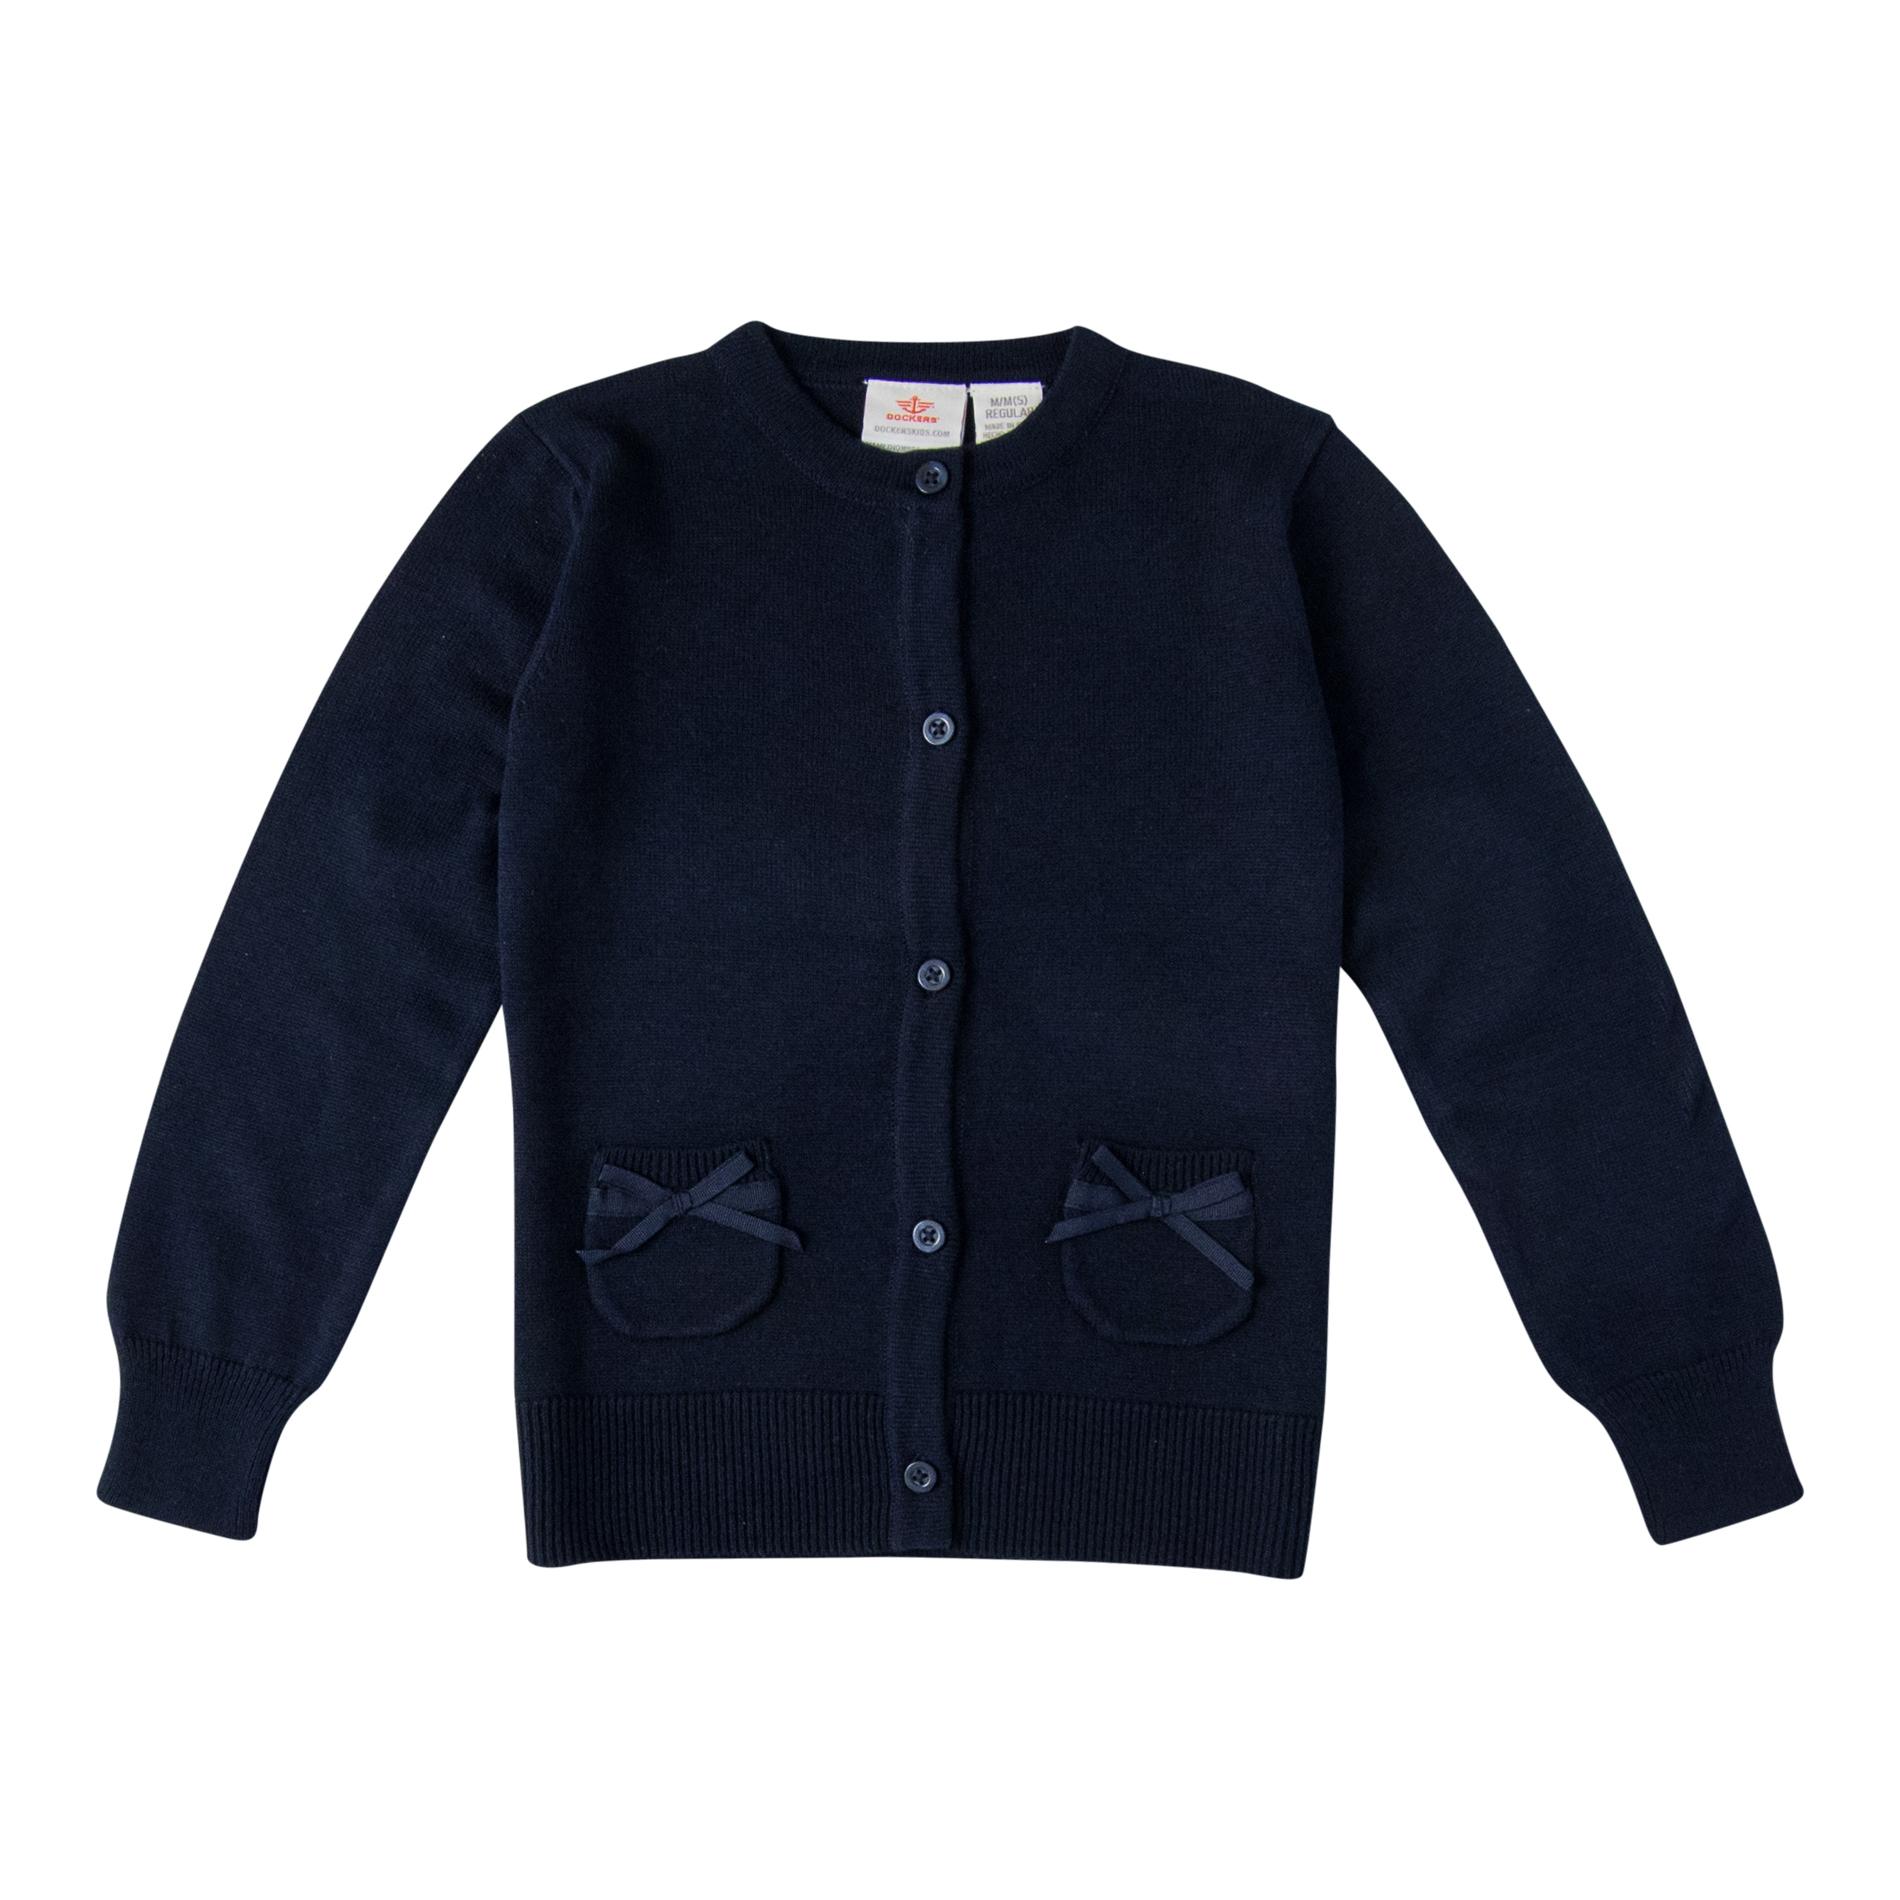 Dockers Girl's Cardigan Sweater